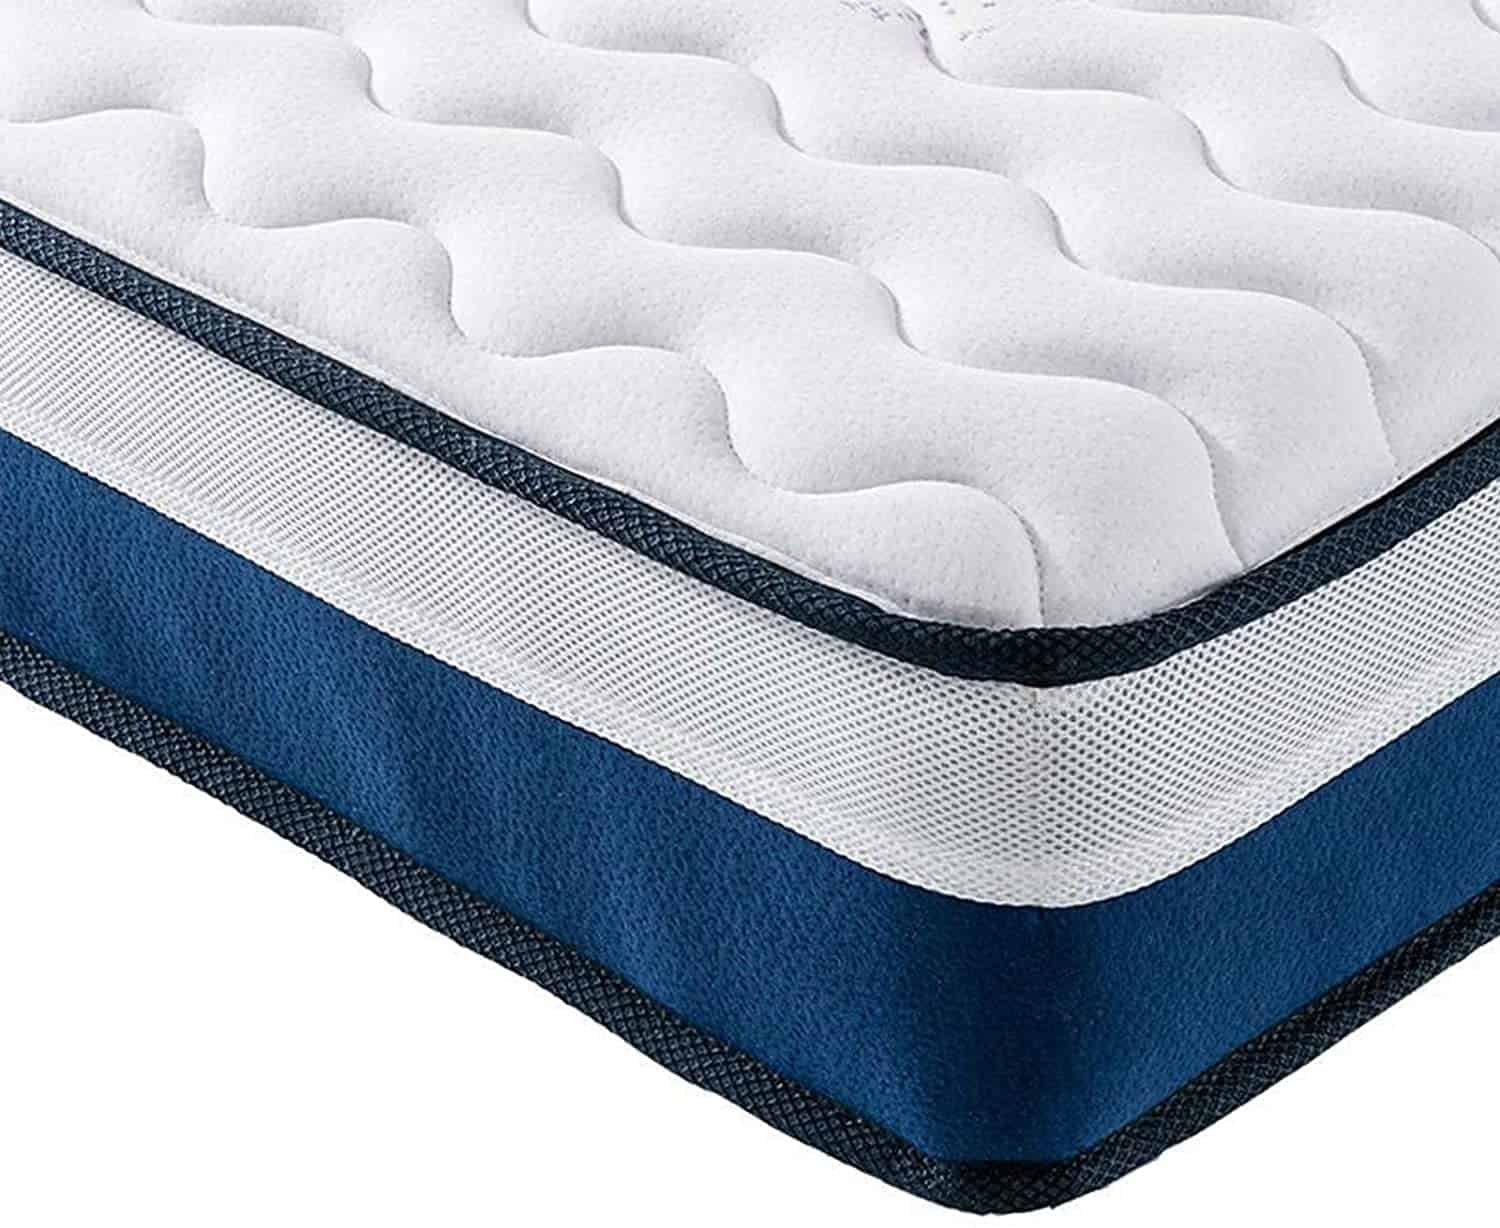 double mattress prices uk